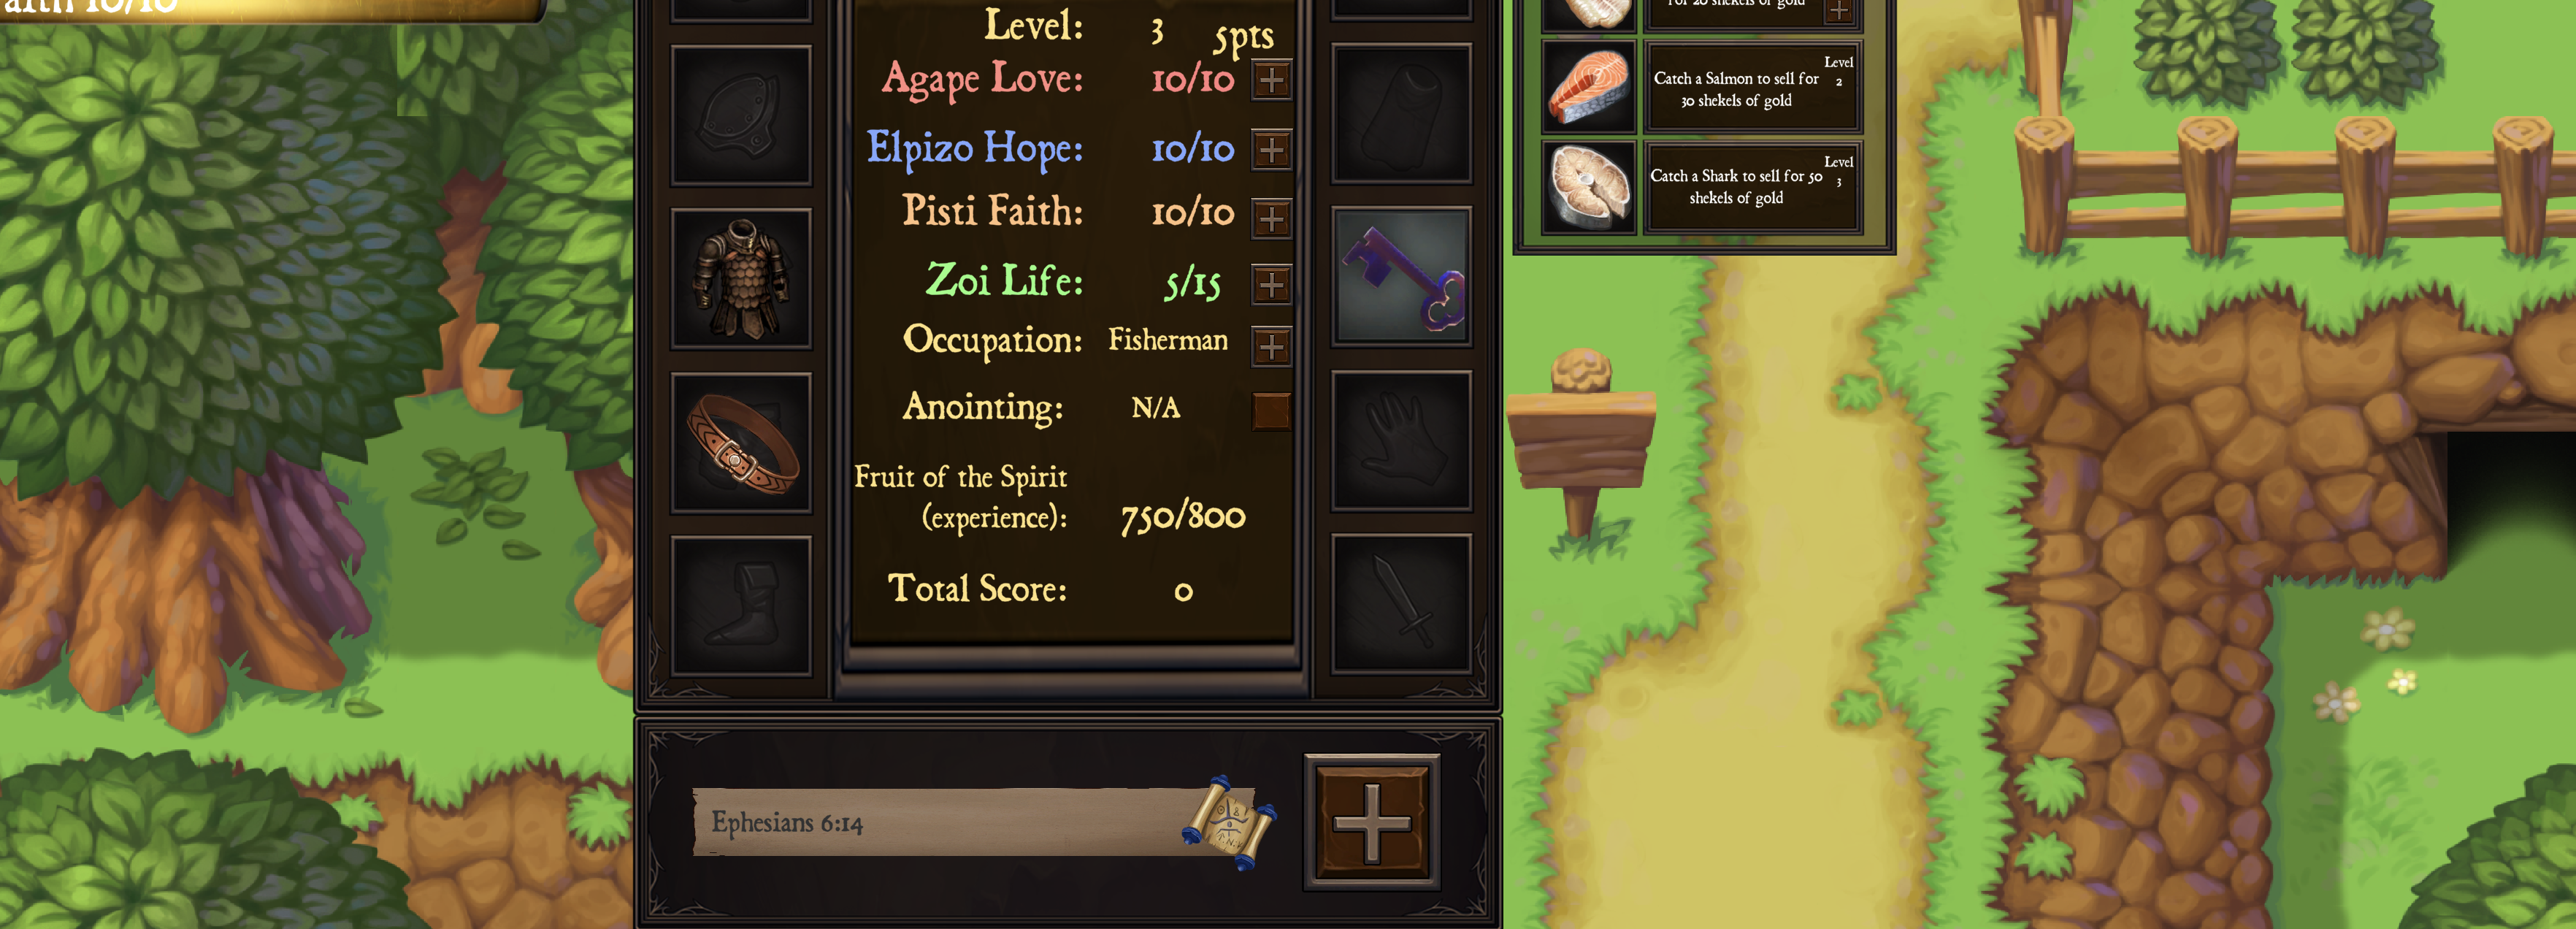 video game screenshot of armor of god